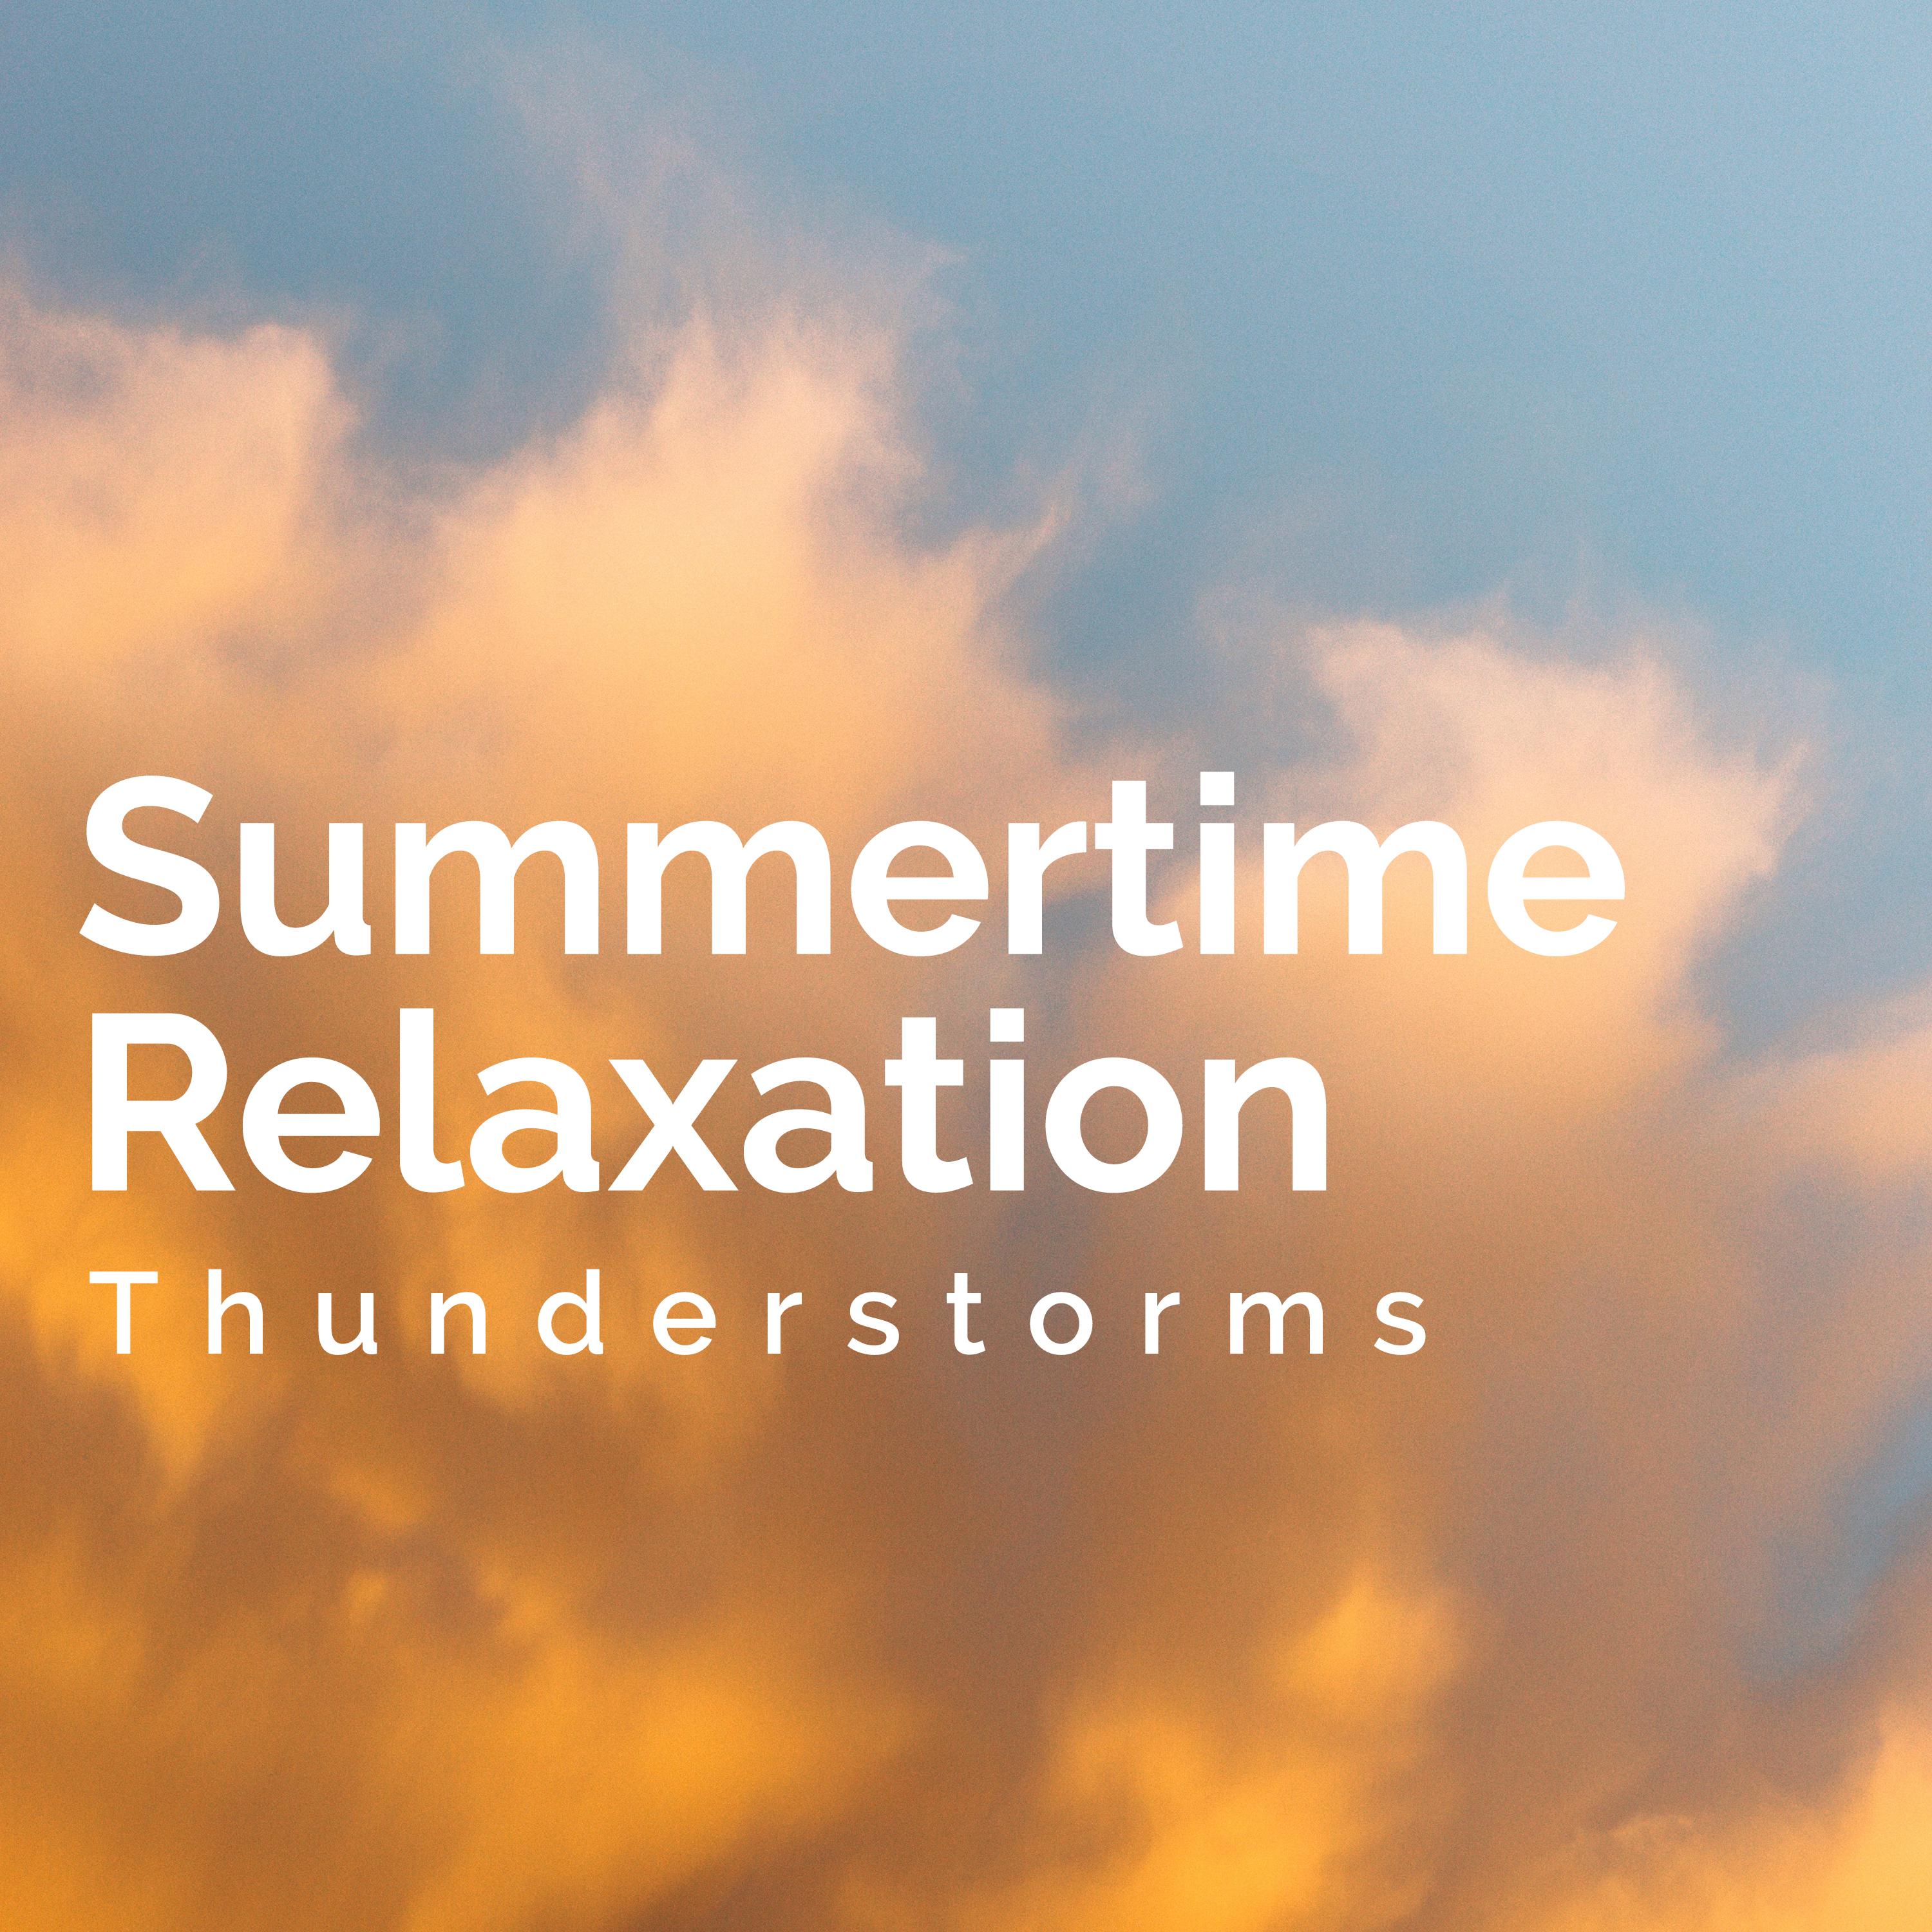 Summertime Relaxation